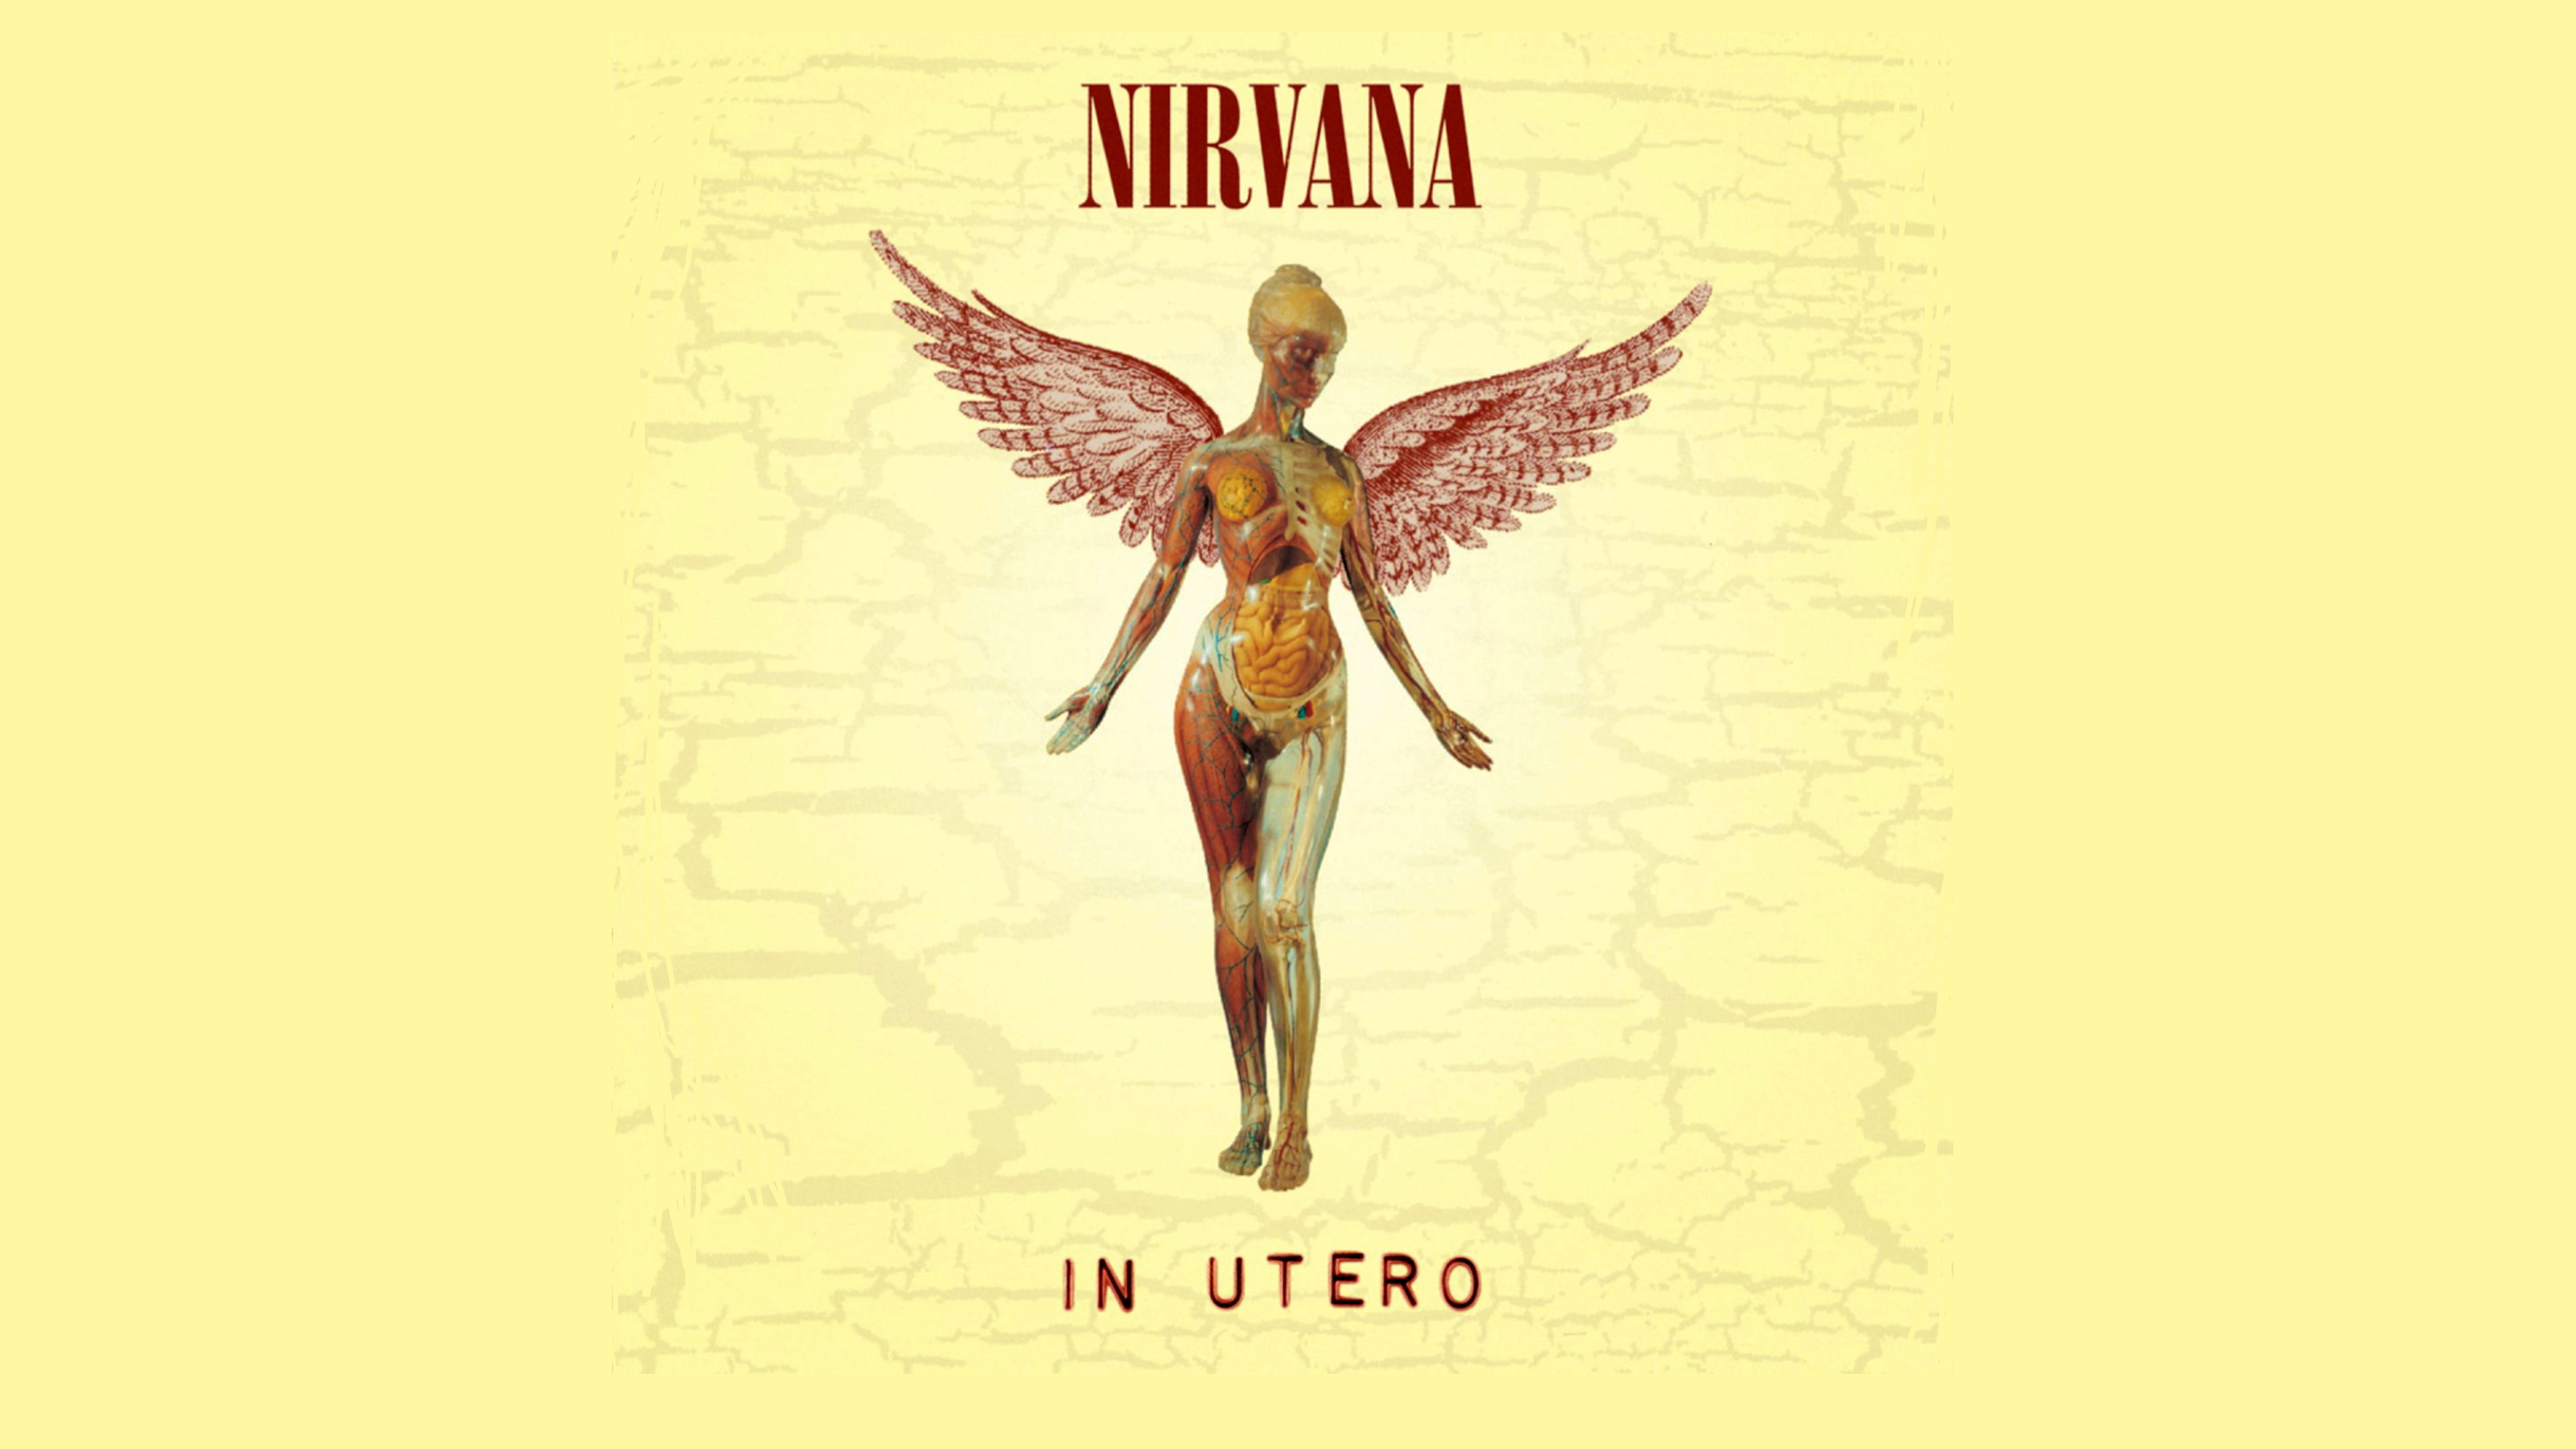 Album Covers, Cover Art, music, Nirvana